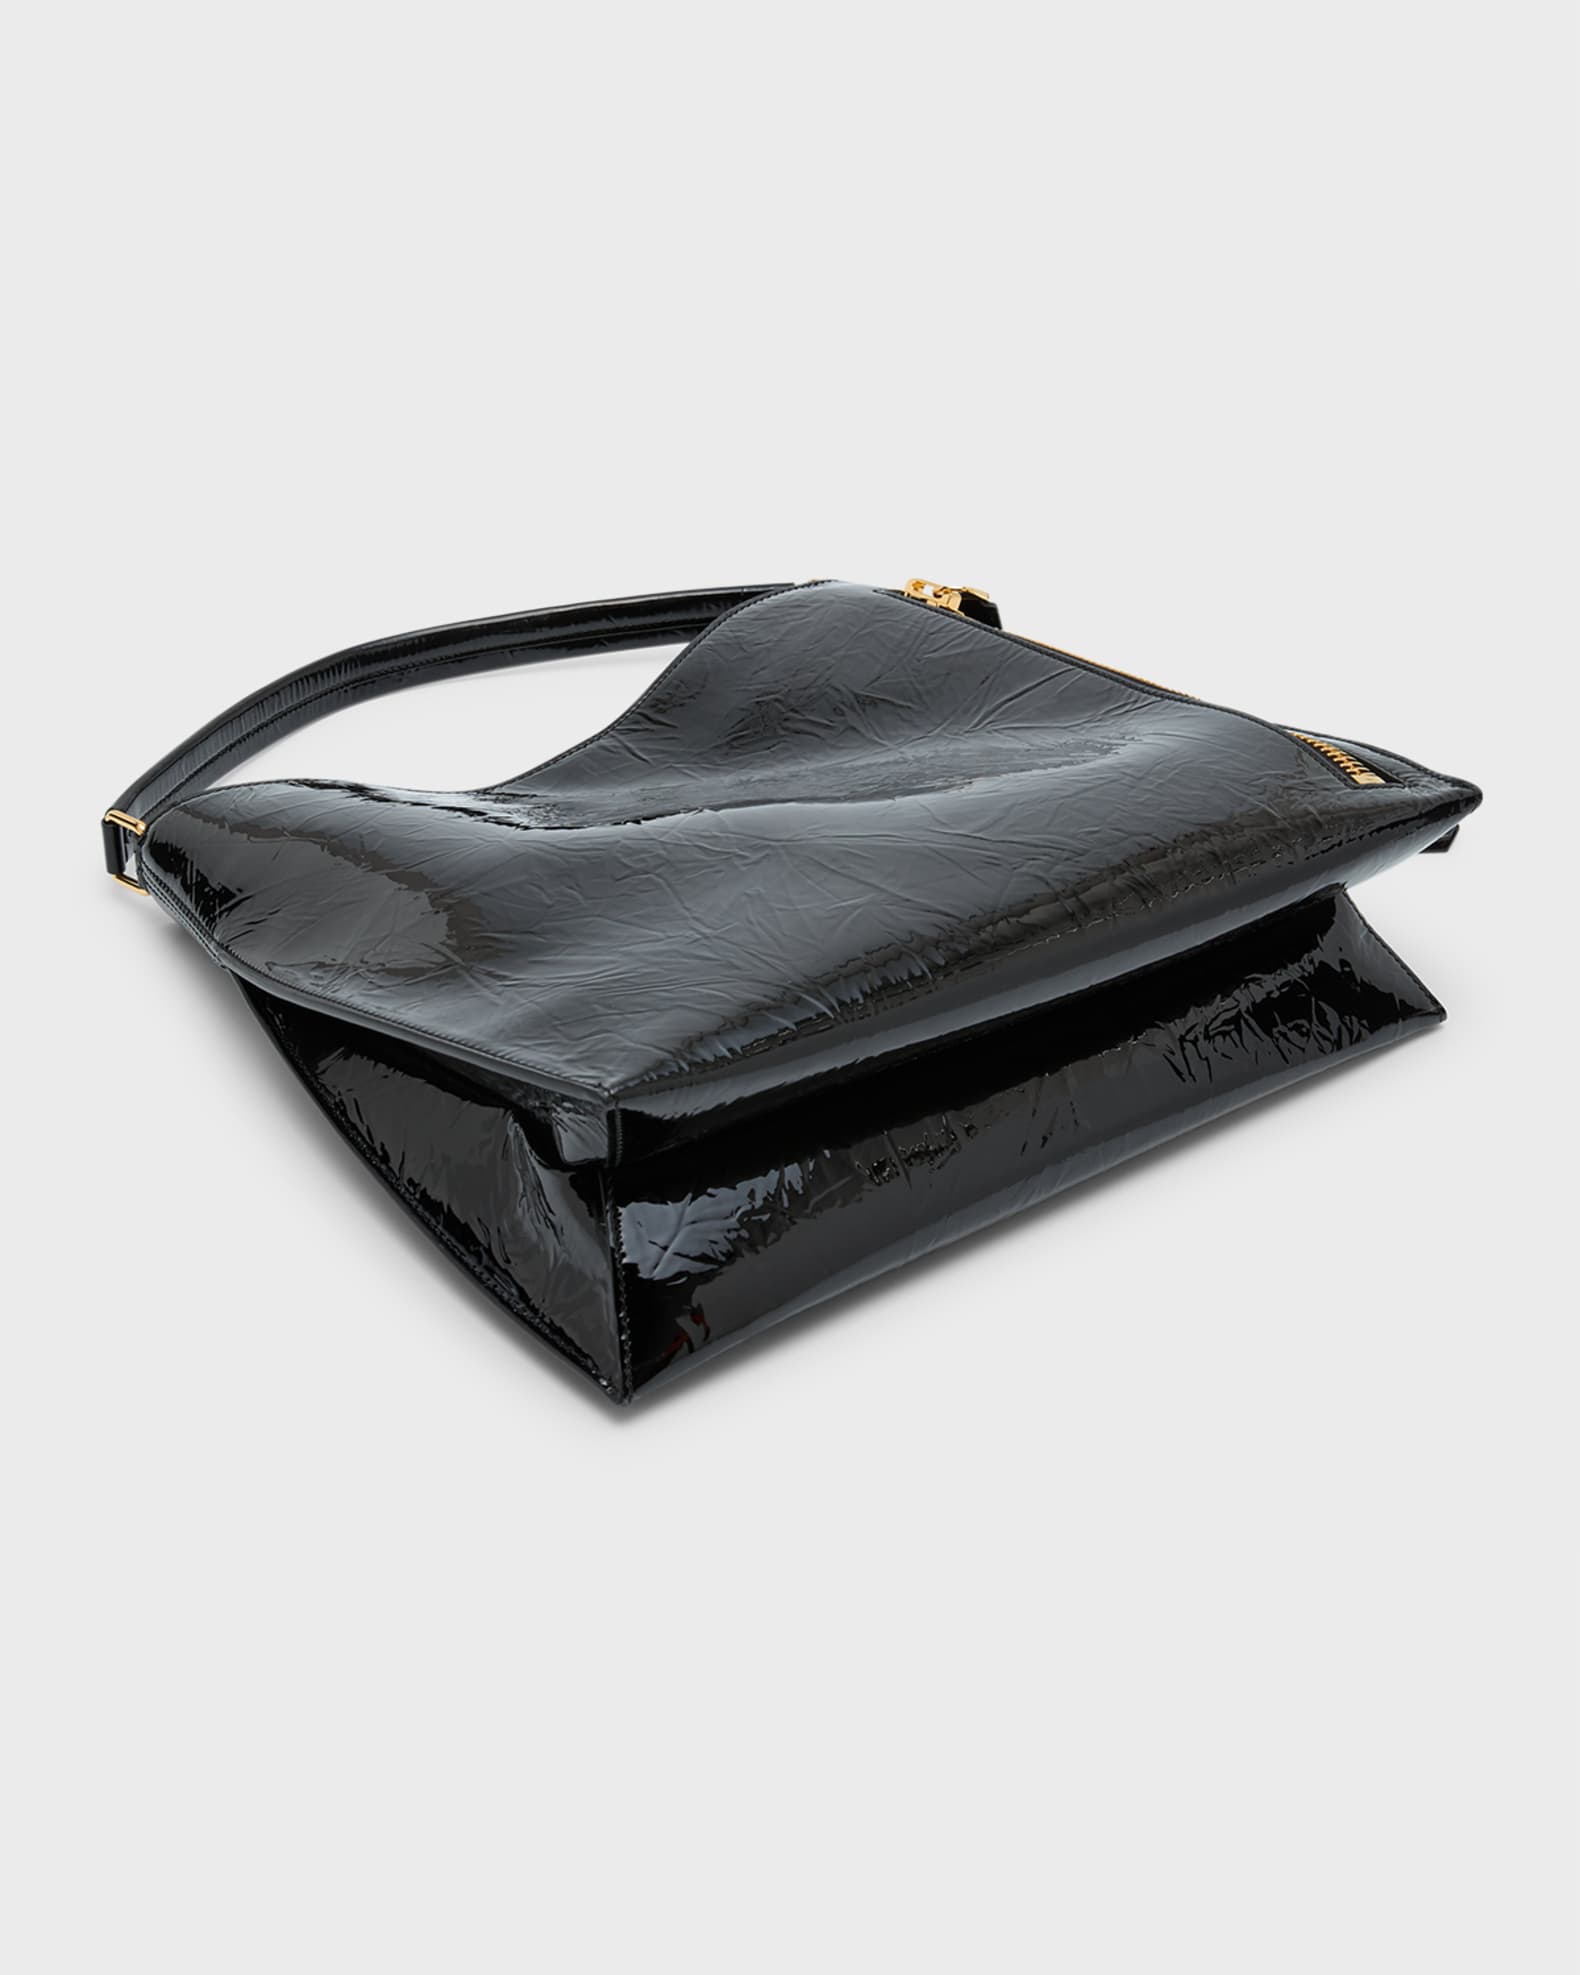 Tom Ford Alix Python Zip Padlock Crossbody Bag Gold, $2,790, Neiman Marcus